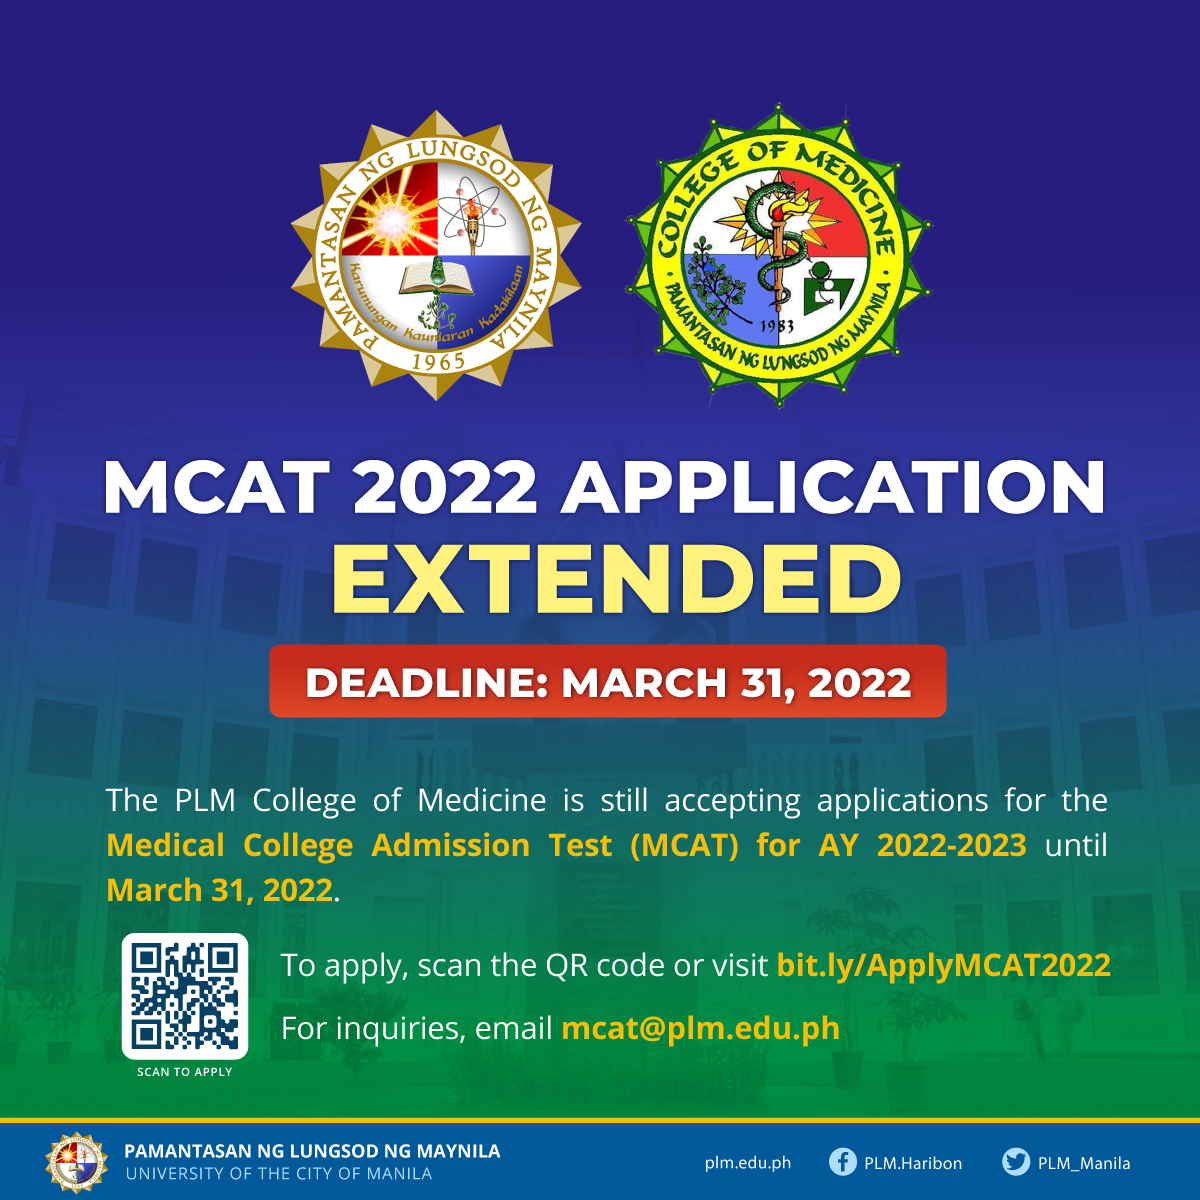 MCAT application deadline extended until March 31, 2022